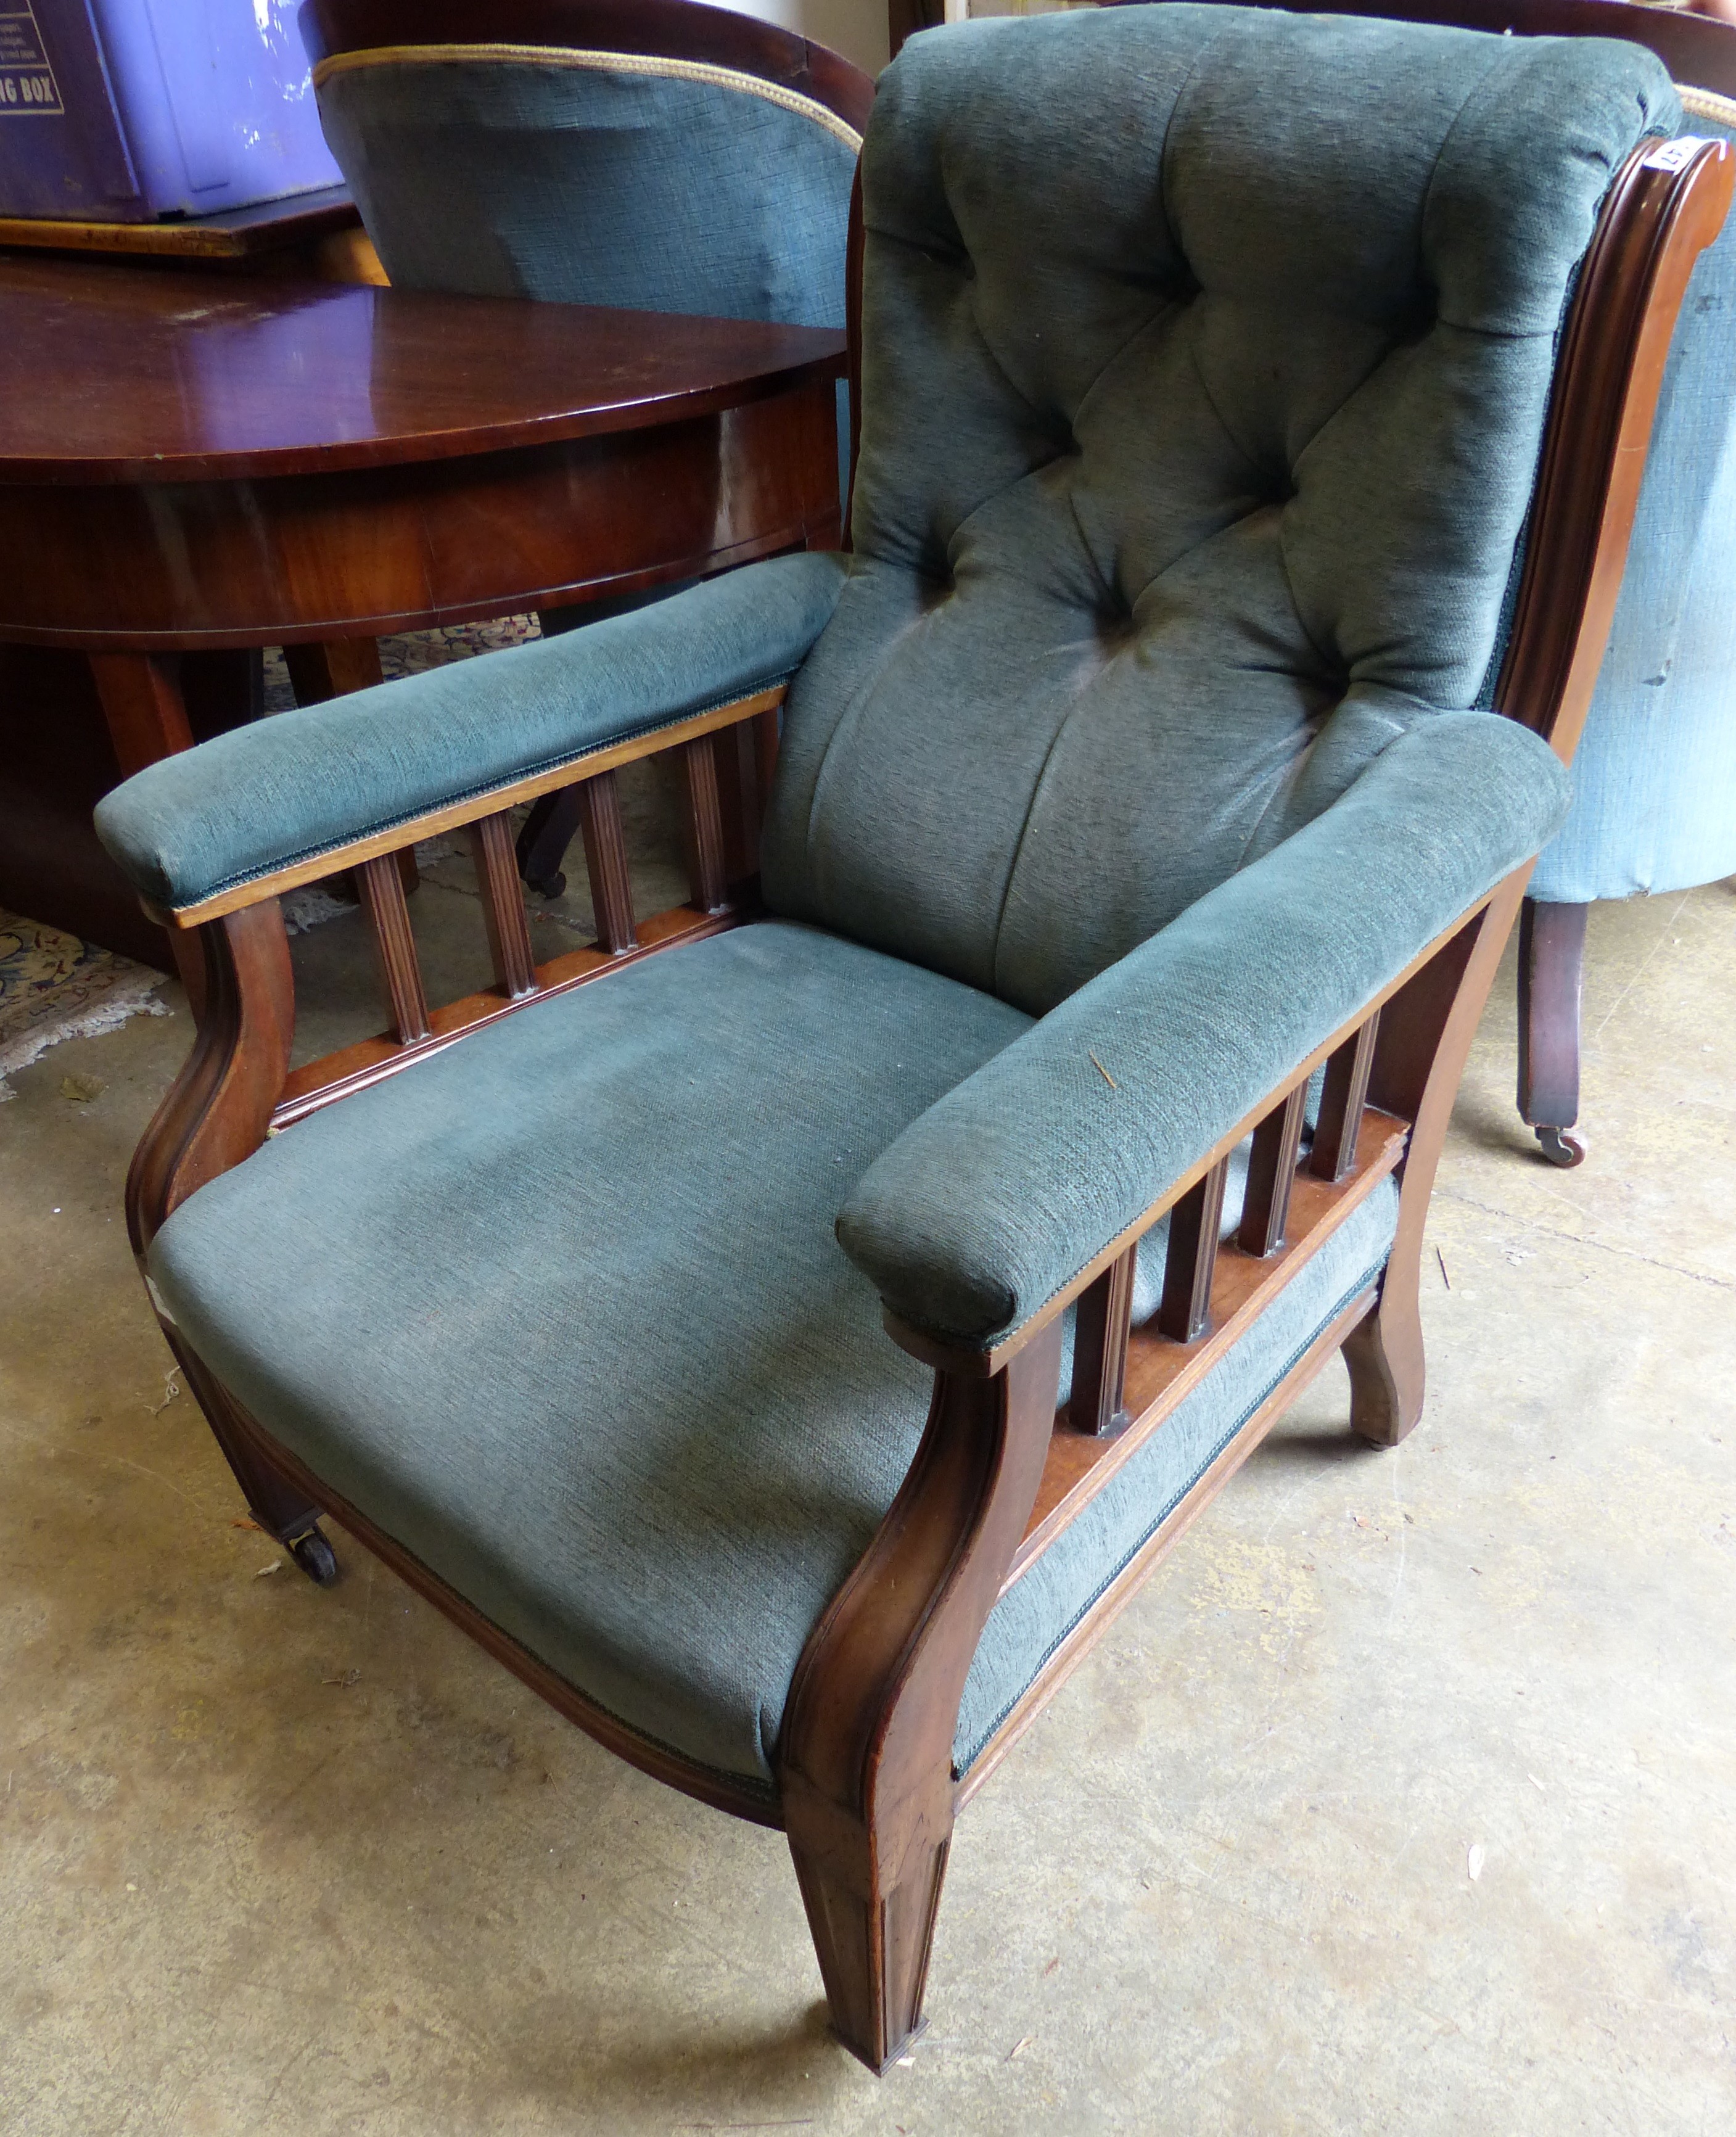 A Victorian mahogany open armchair.